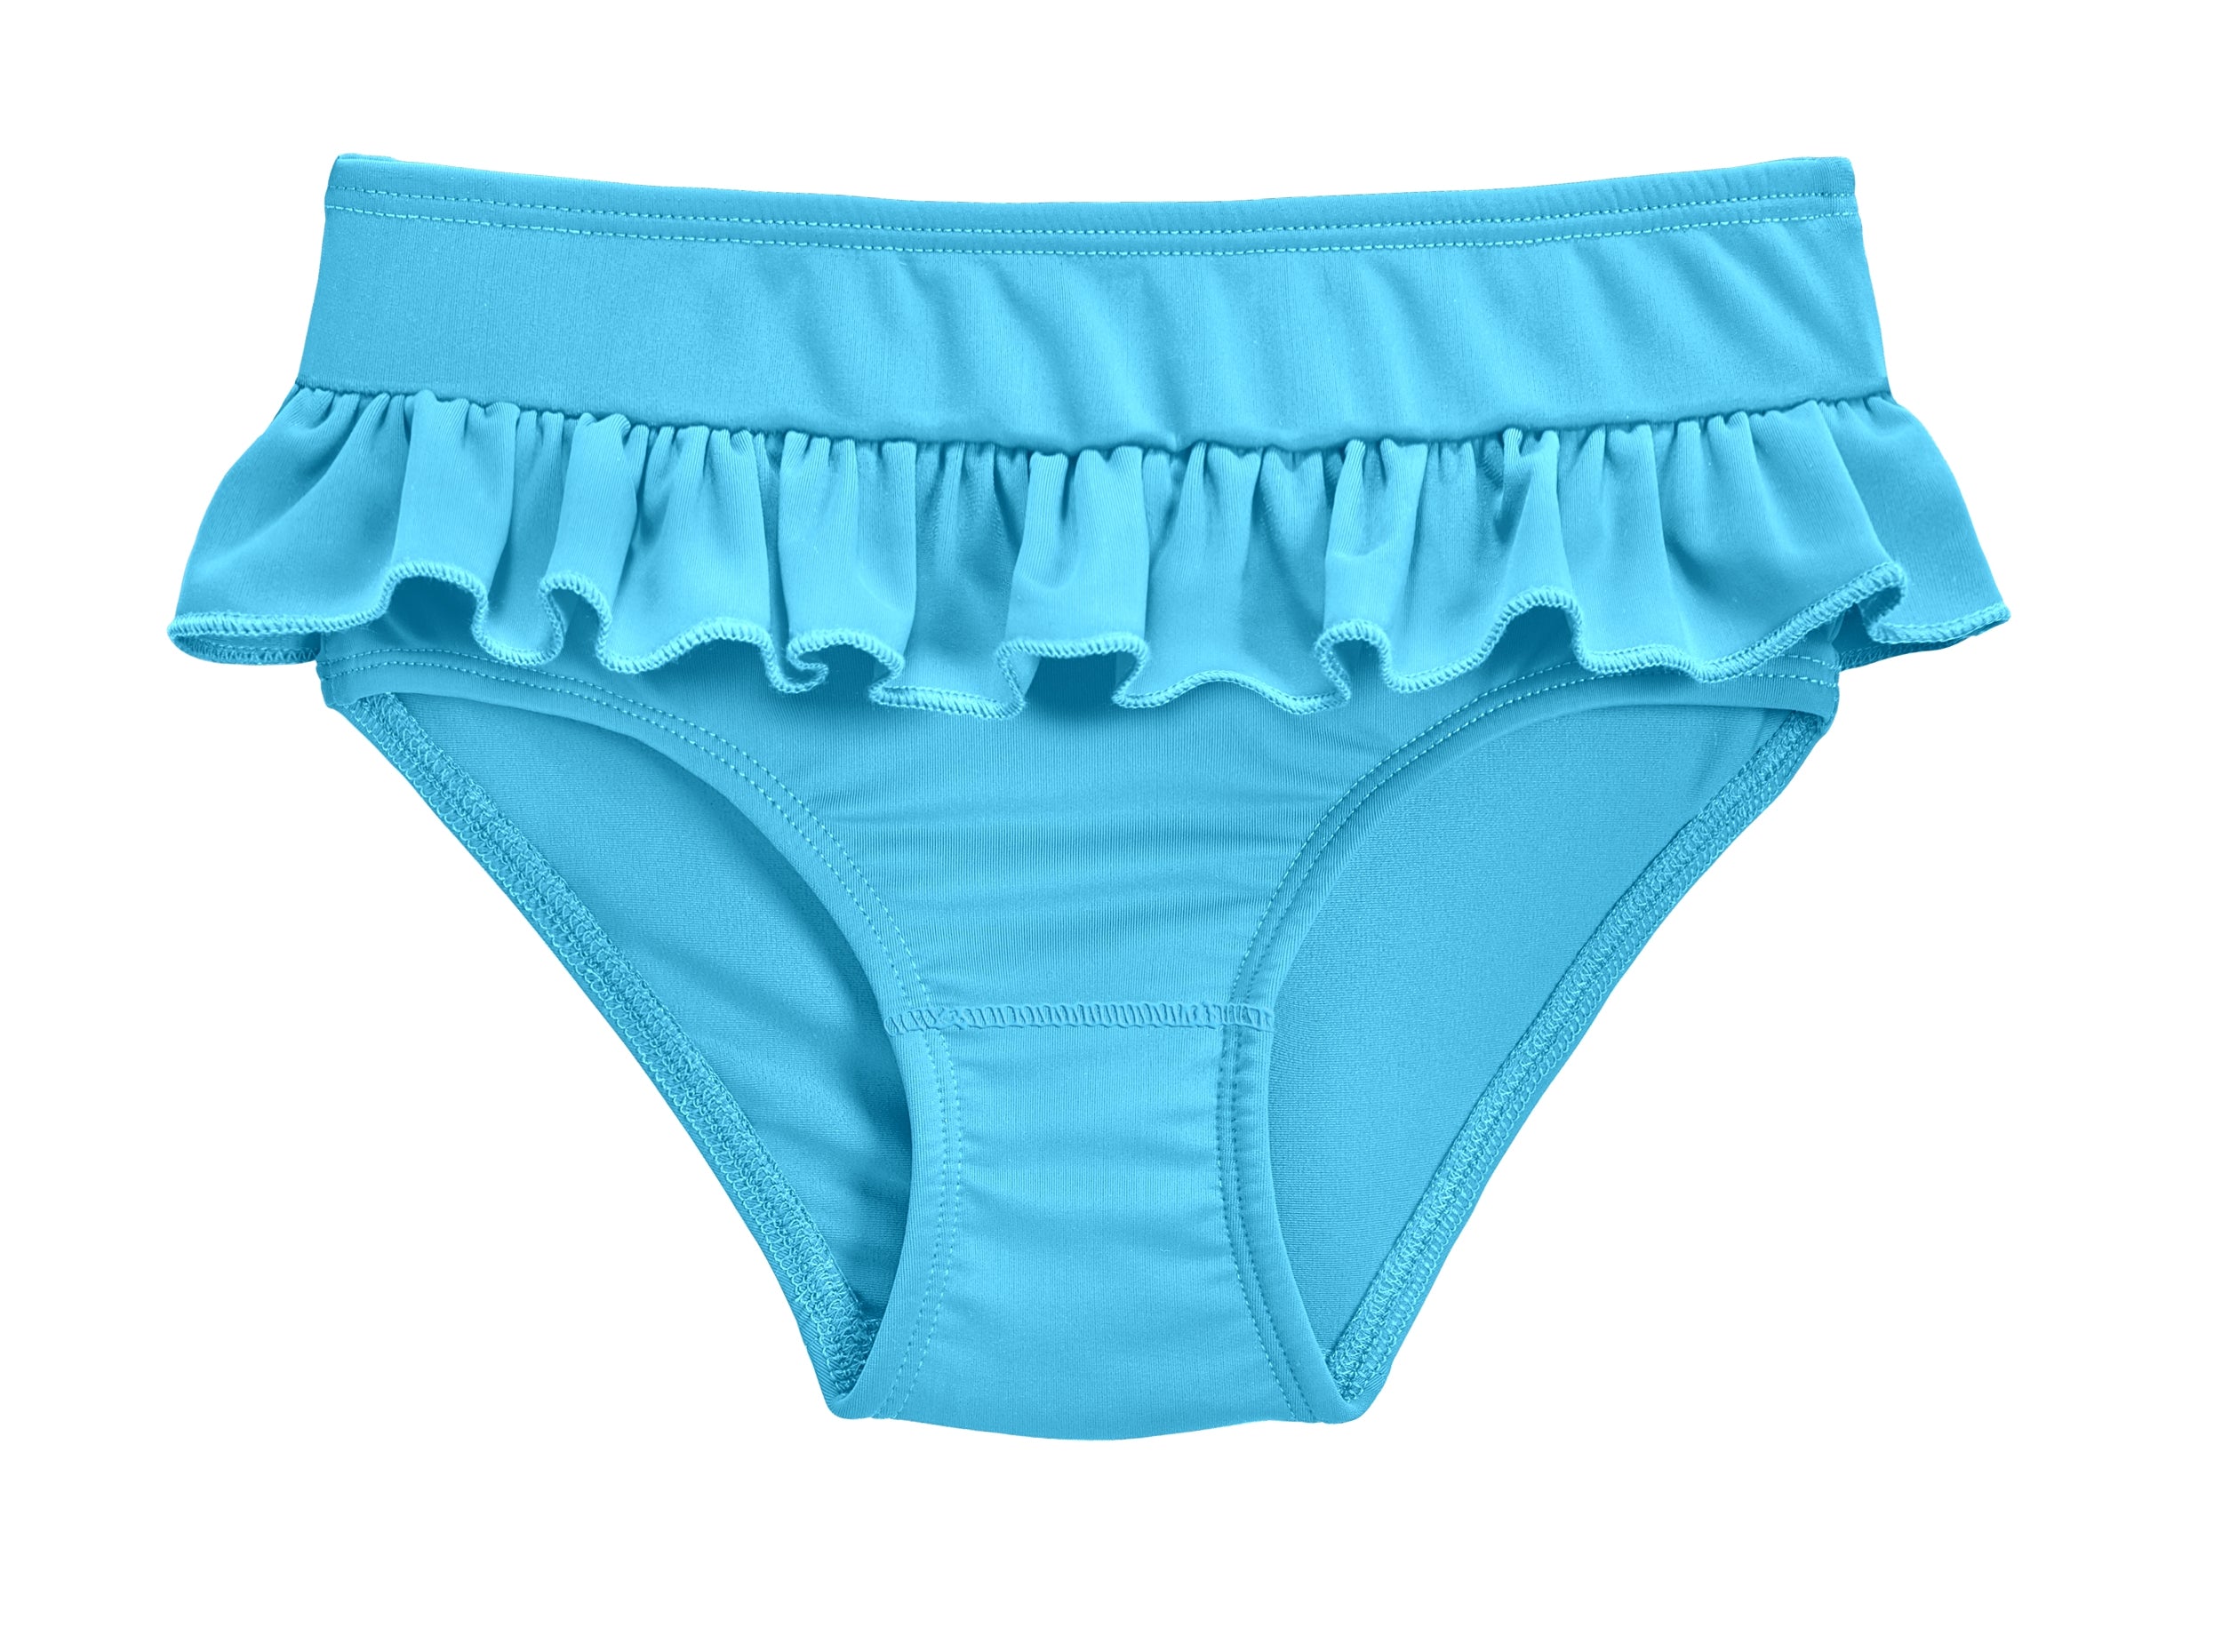 Best Deal for Underwater Mermaid Daily Underwear Quick Dry